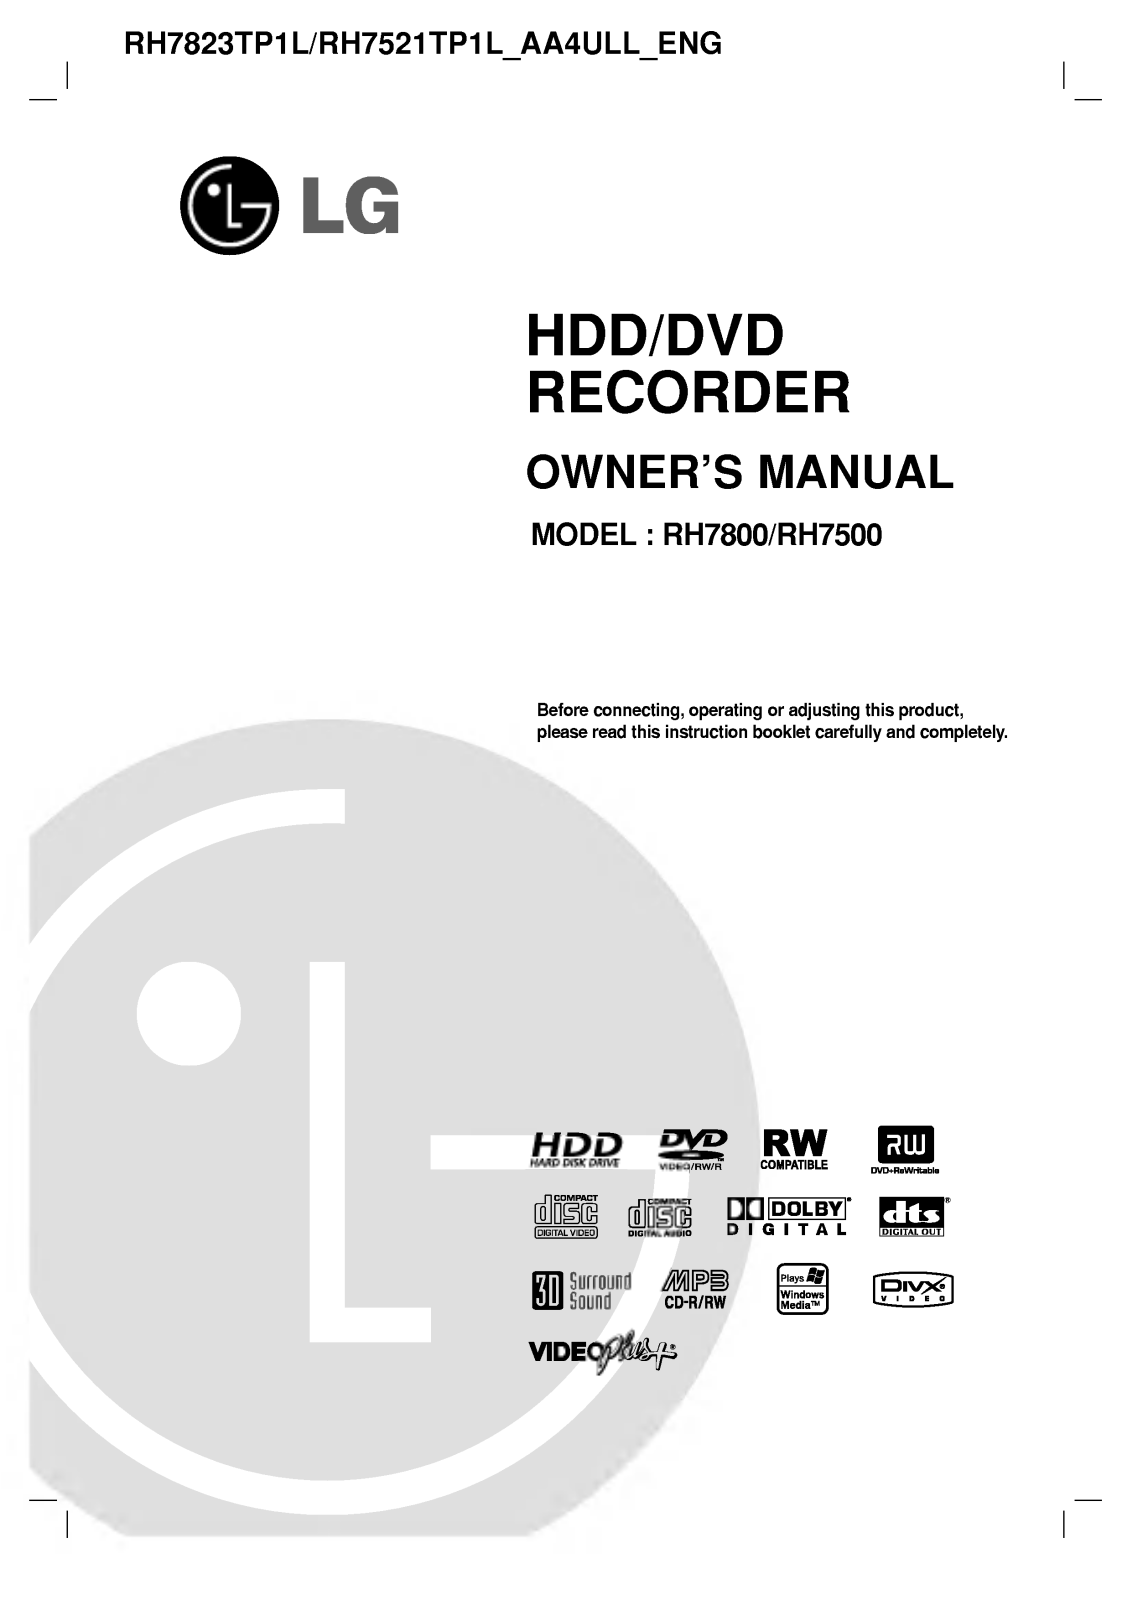 LG RH7521TP1L Owner’s Manual